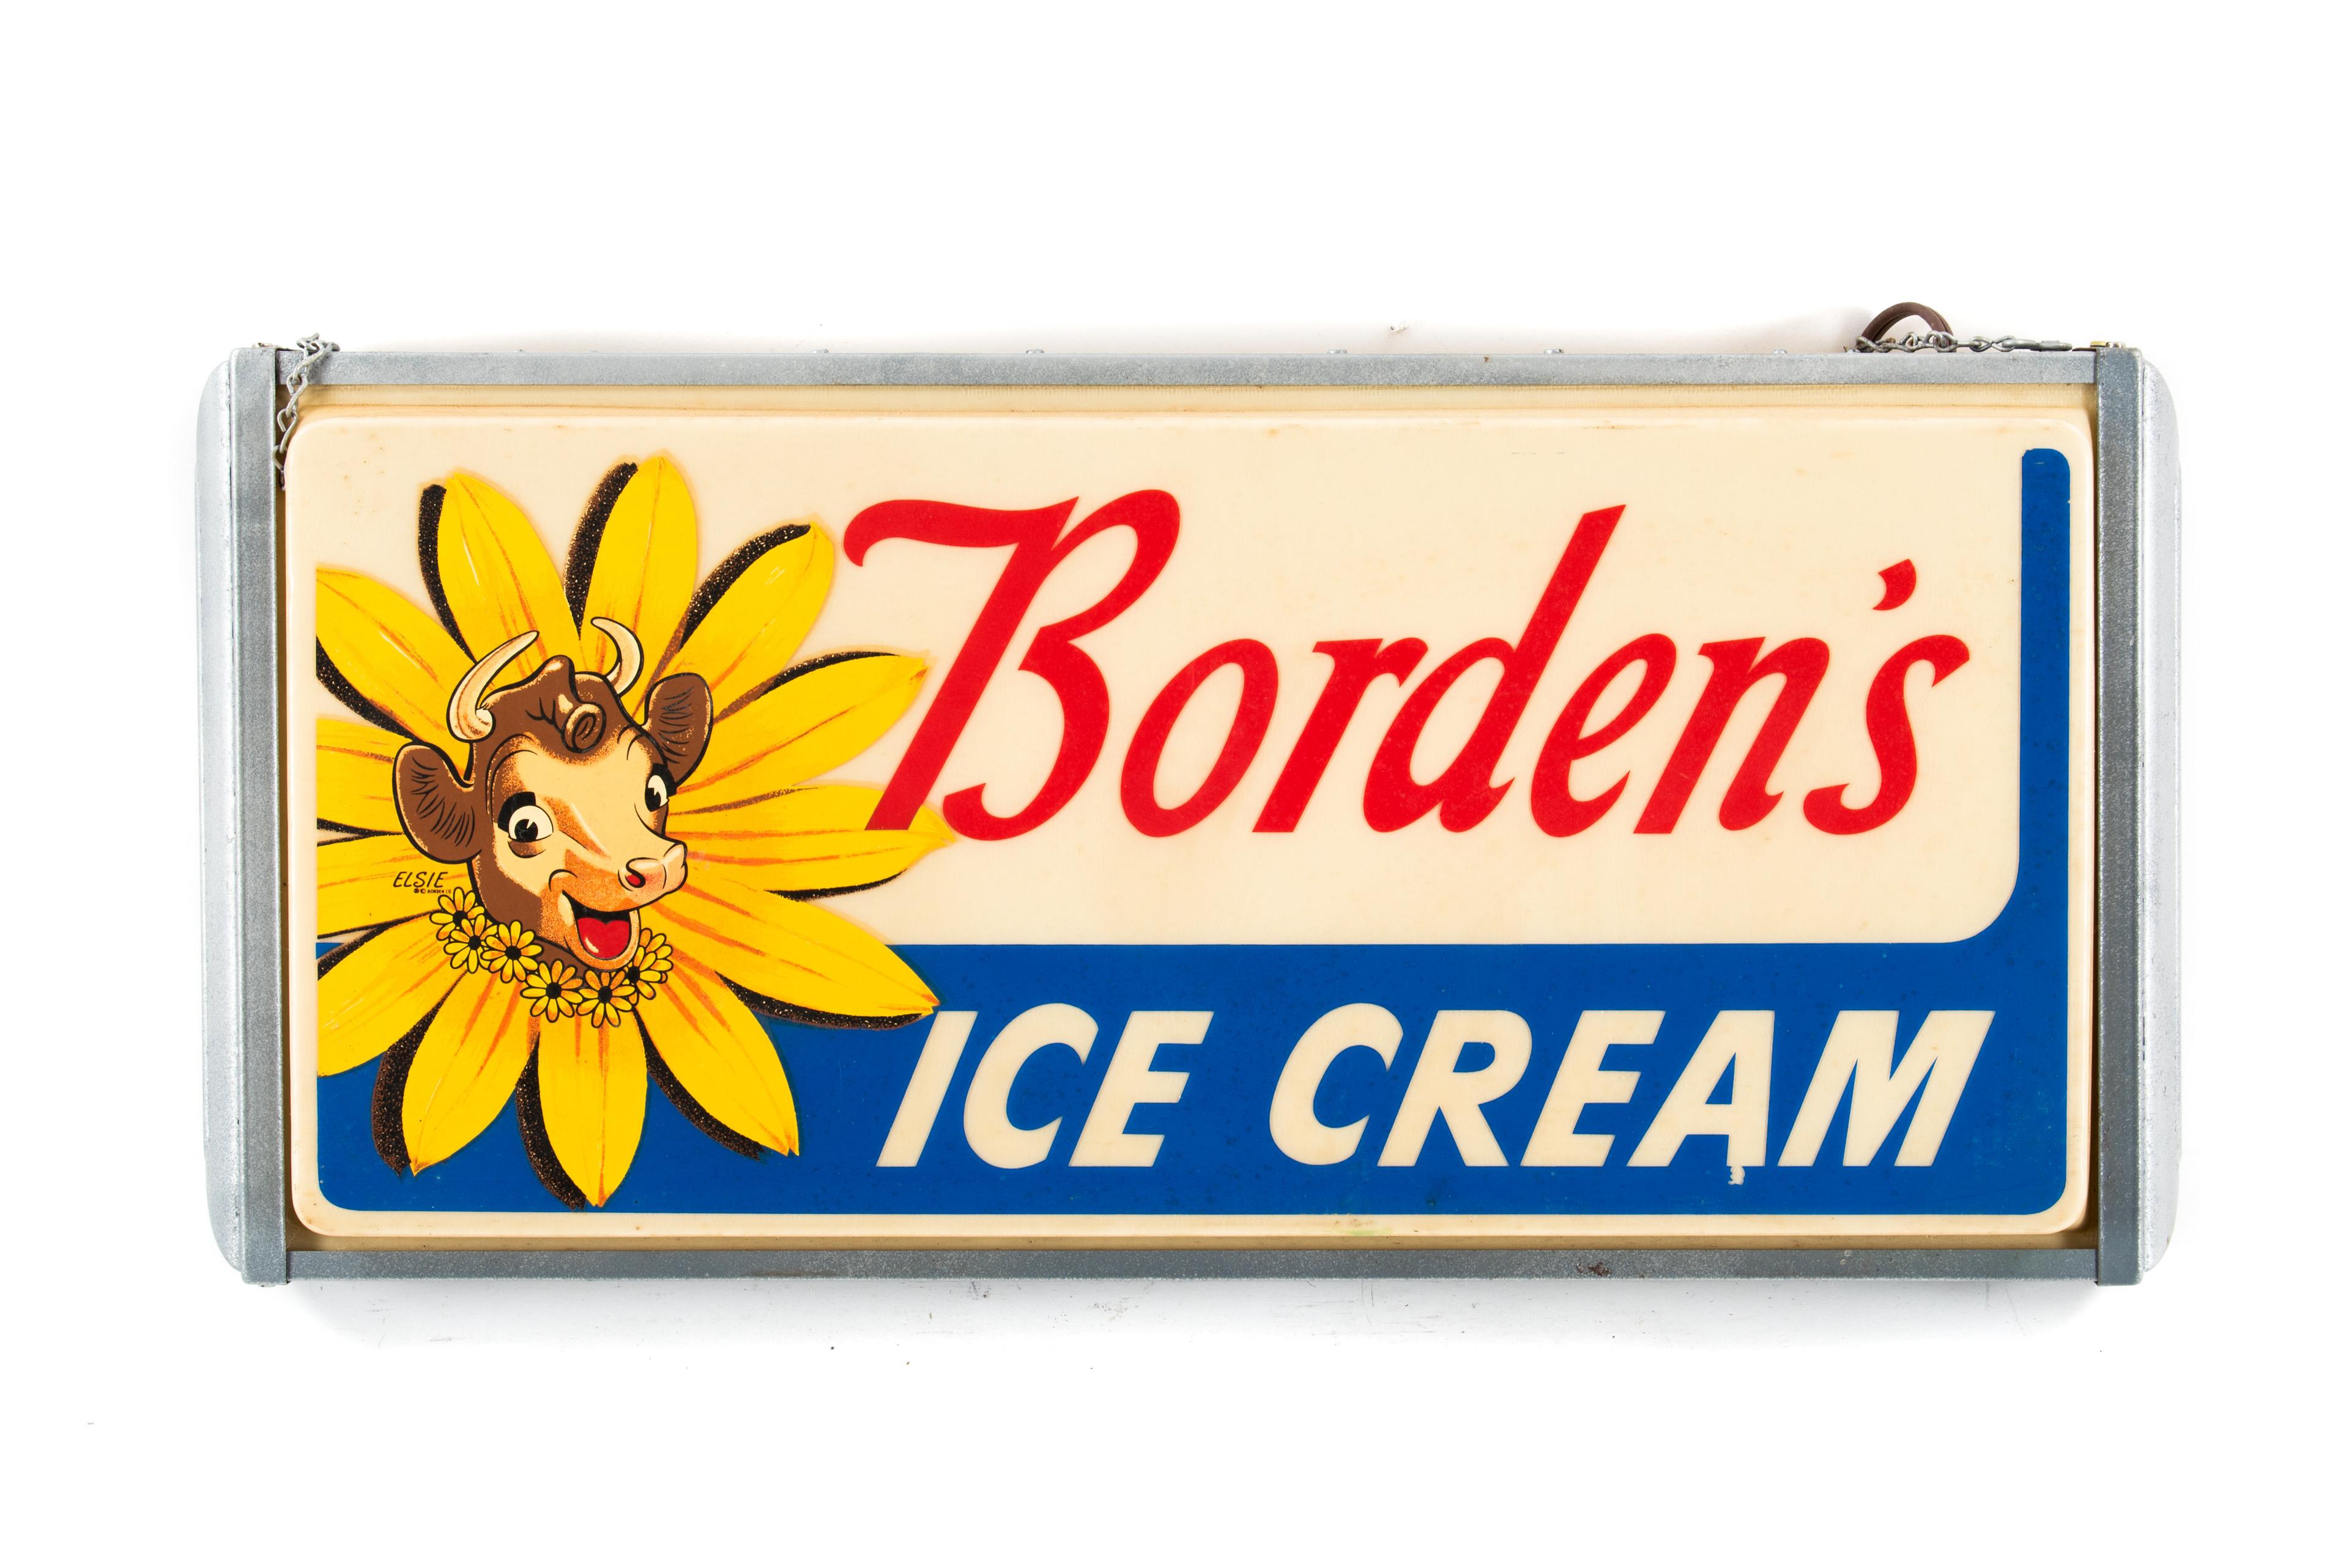 Borden's Ice Cream Lighted Plastic Sign